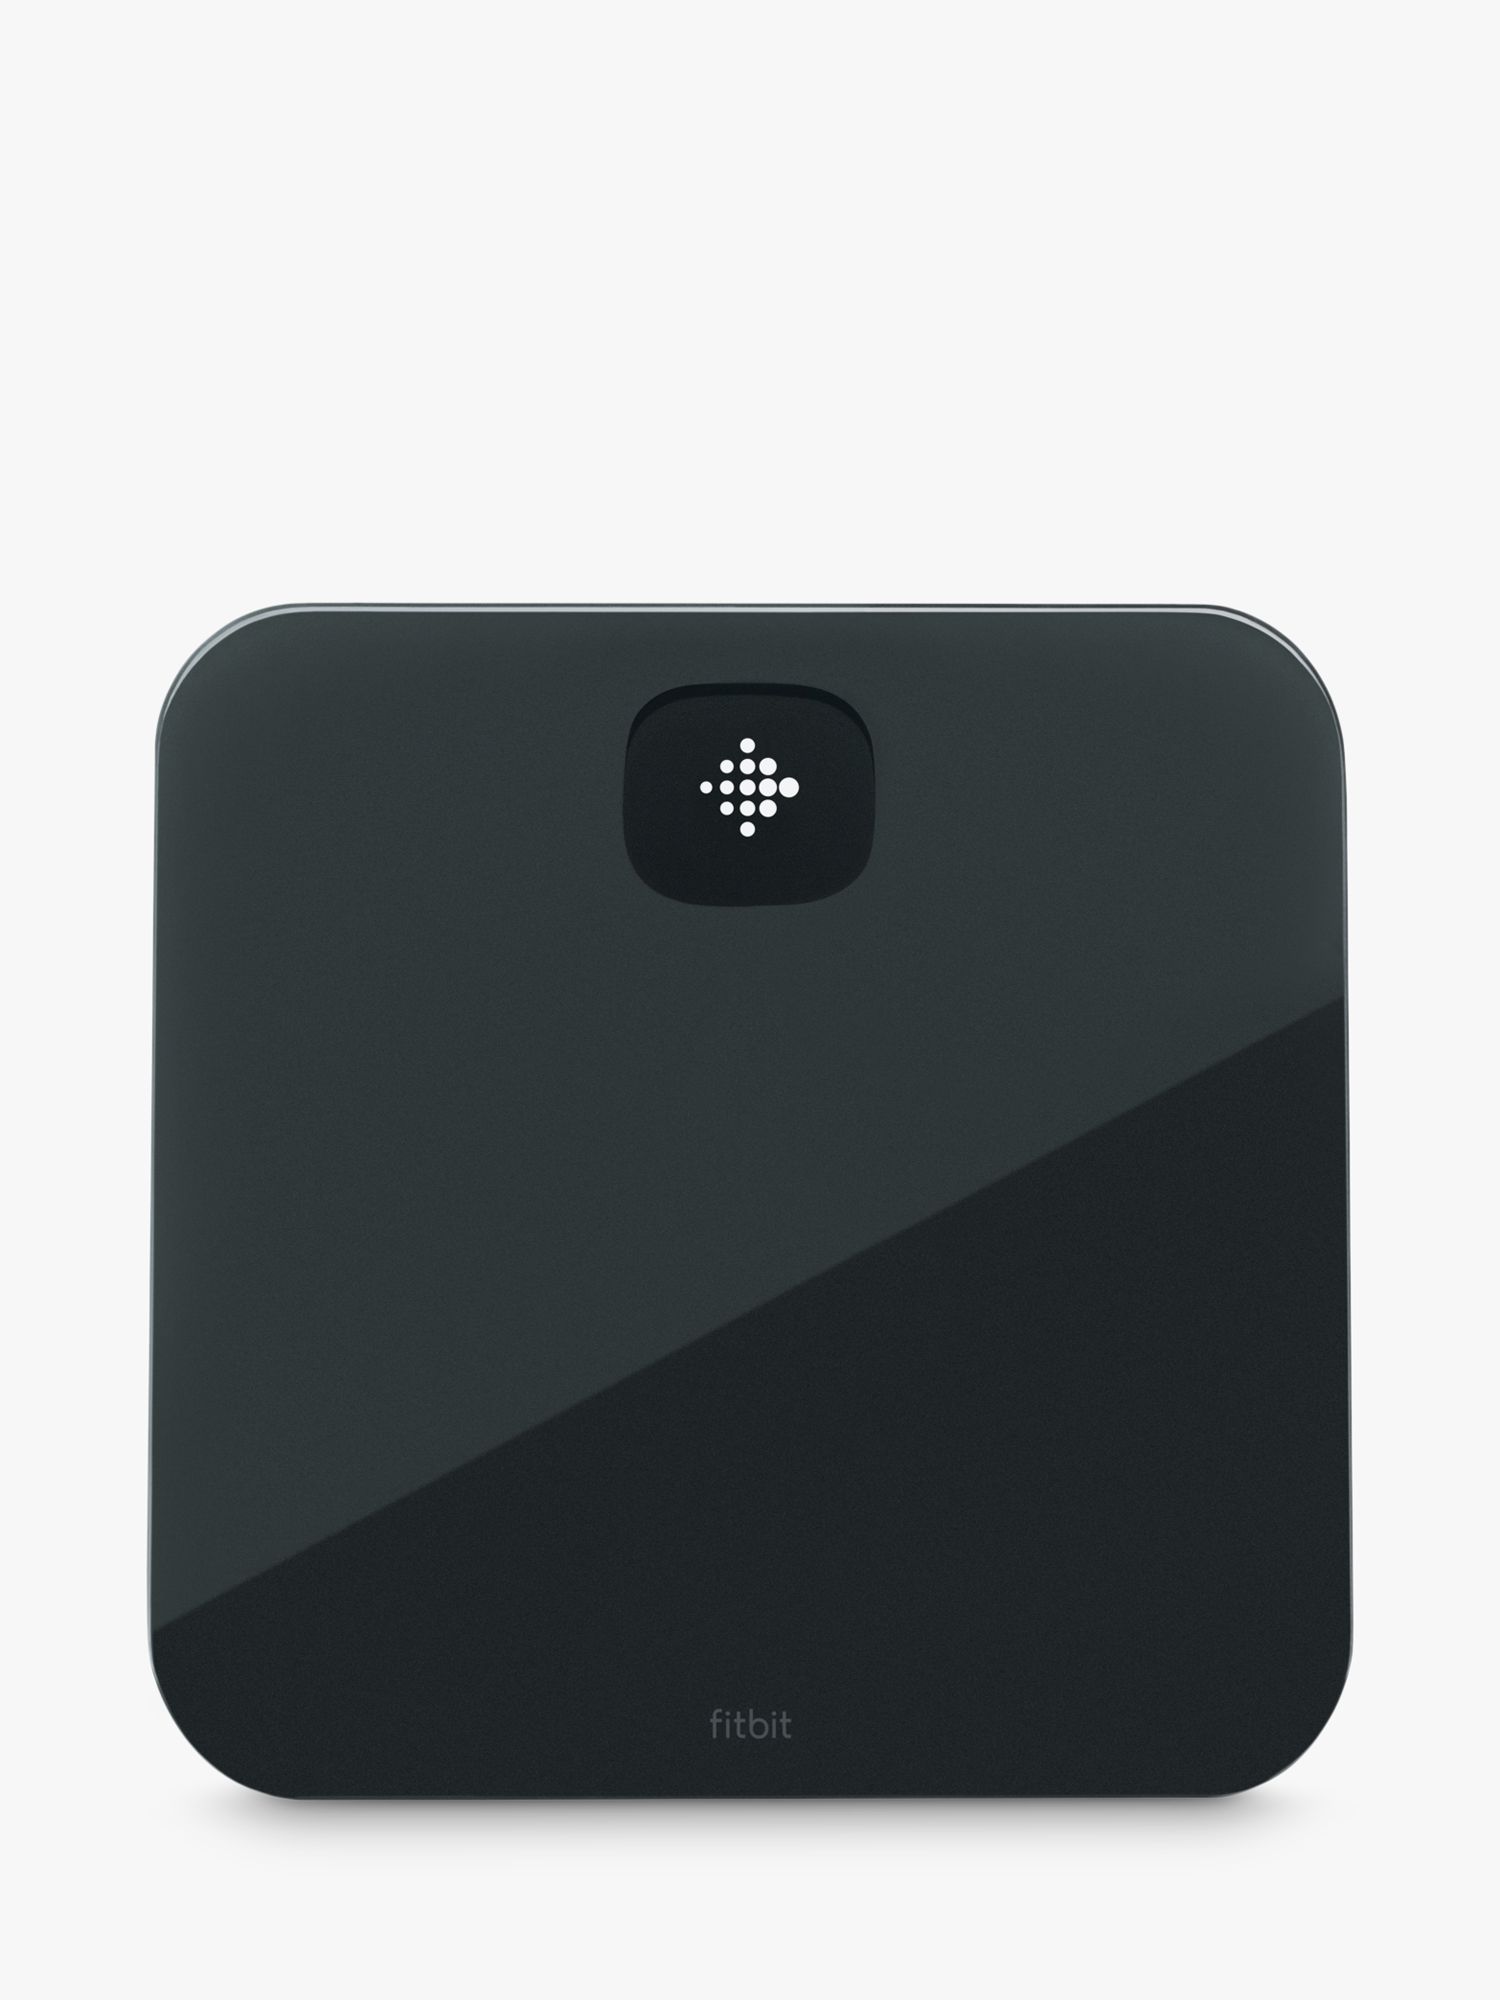 Fitbit Air Bluetooth Smart Scale, Black